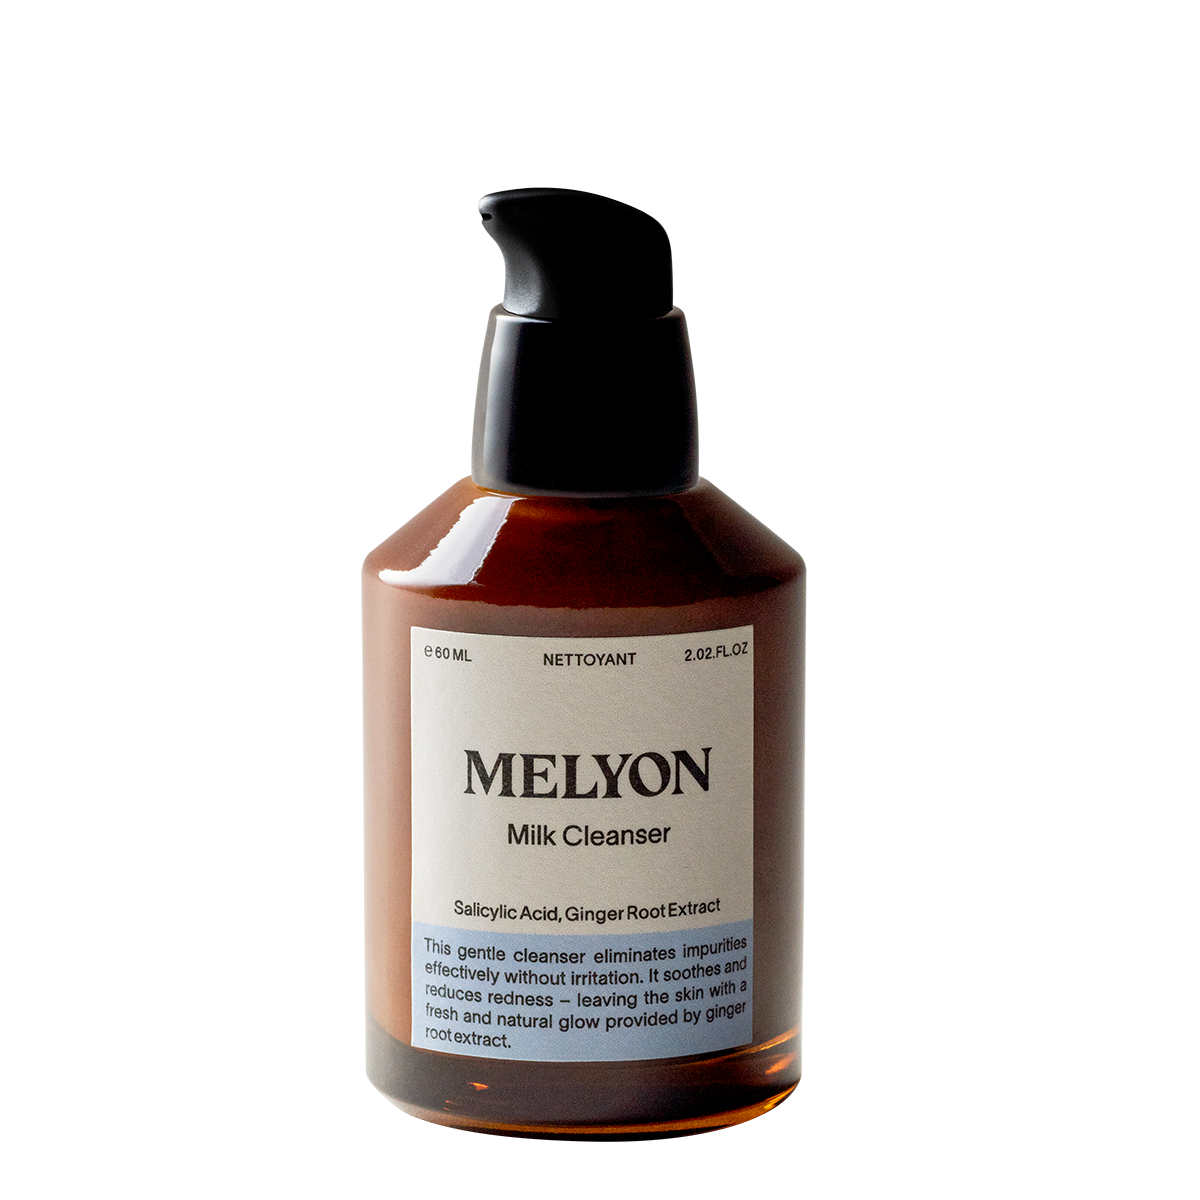 Melyon Milk Cleanser 60ml